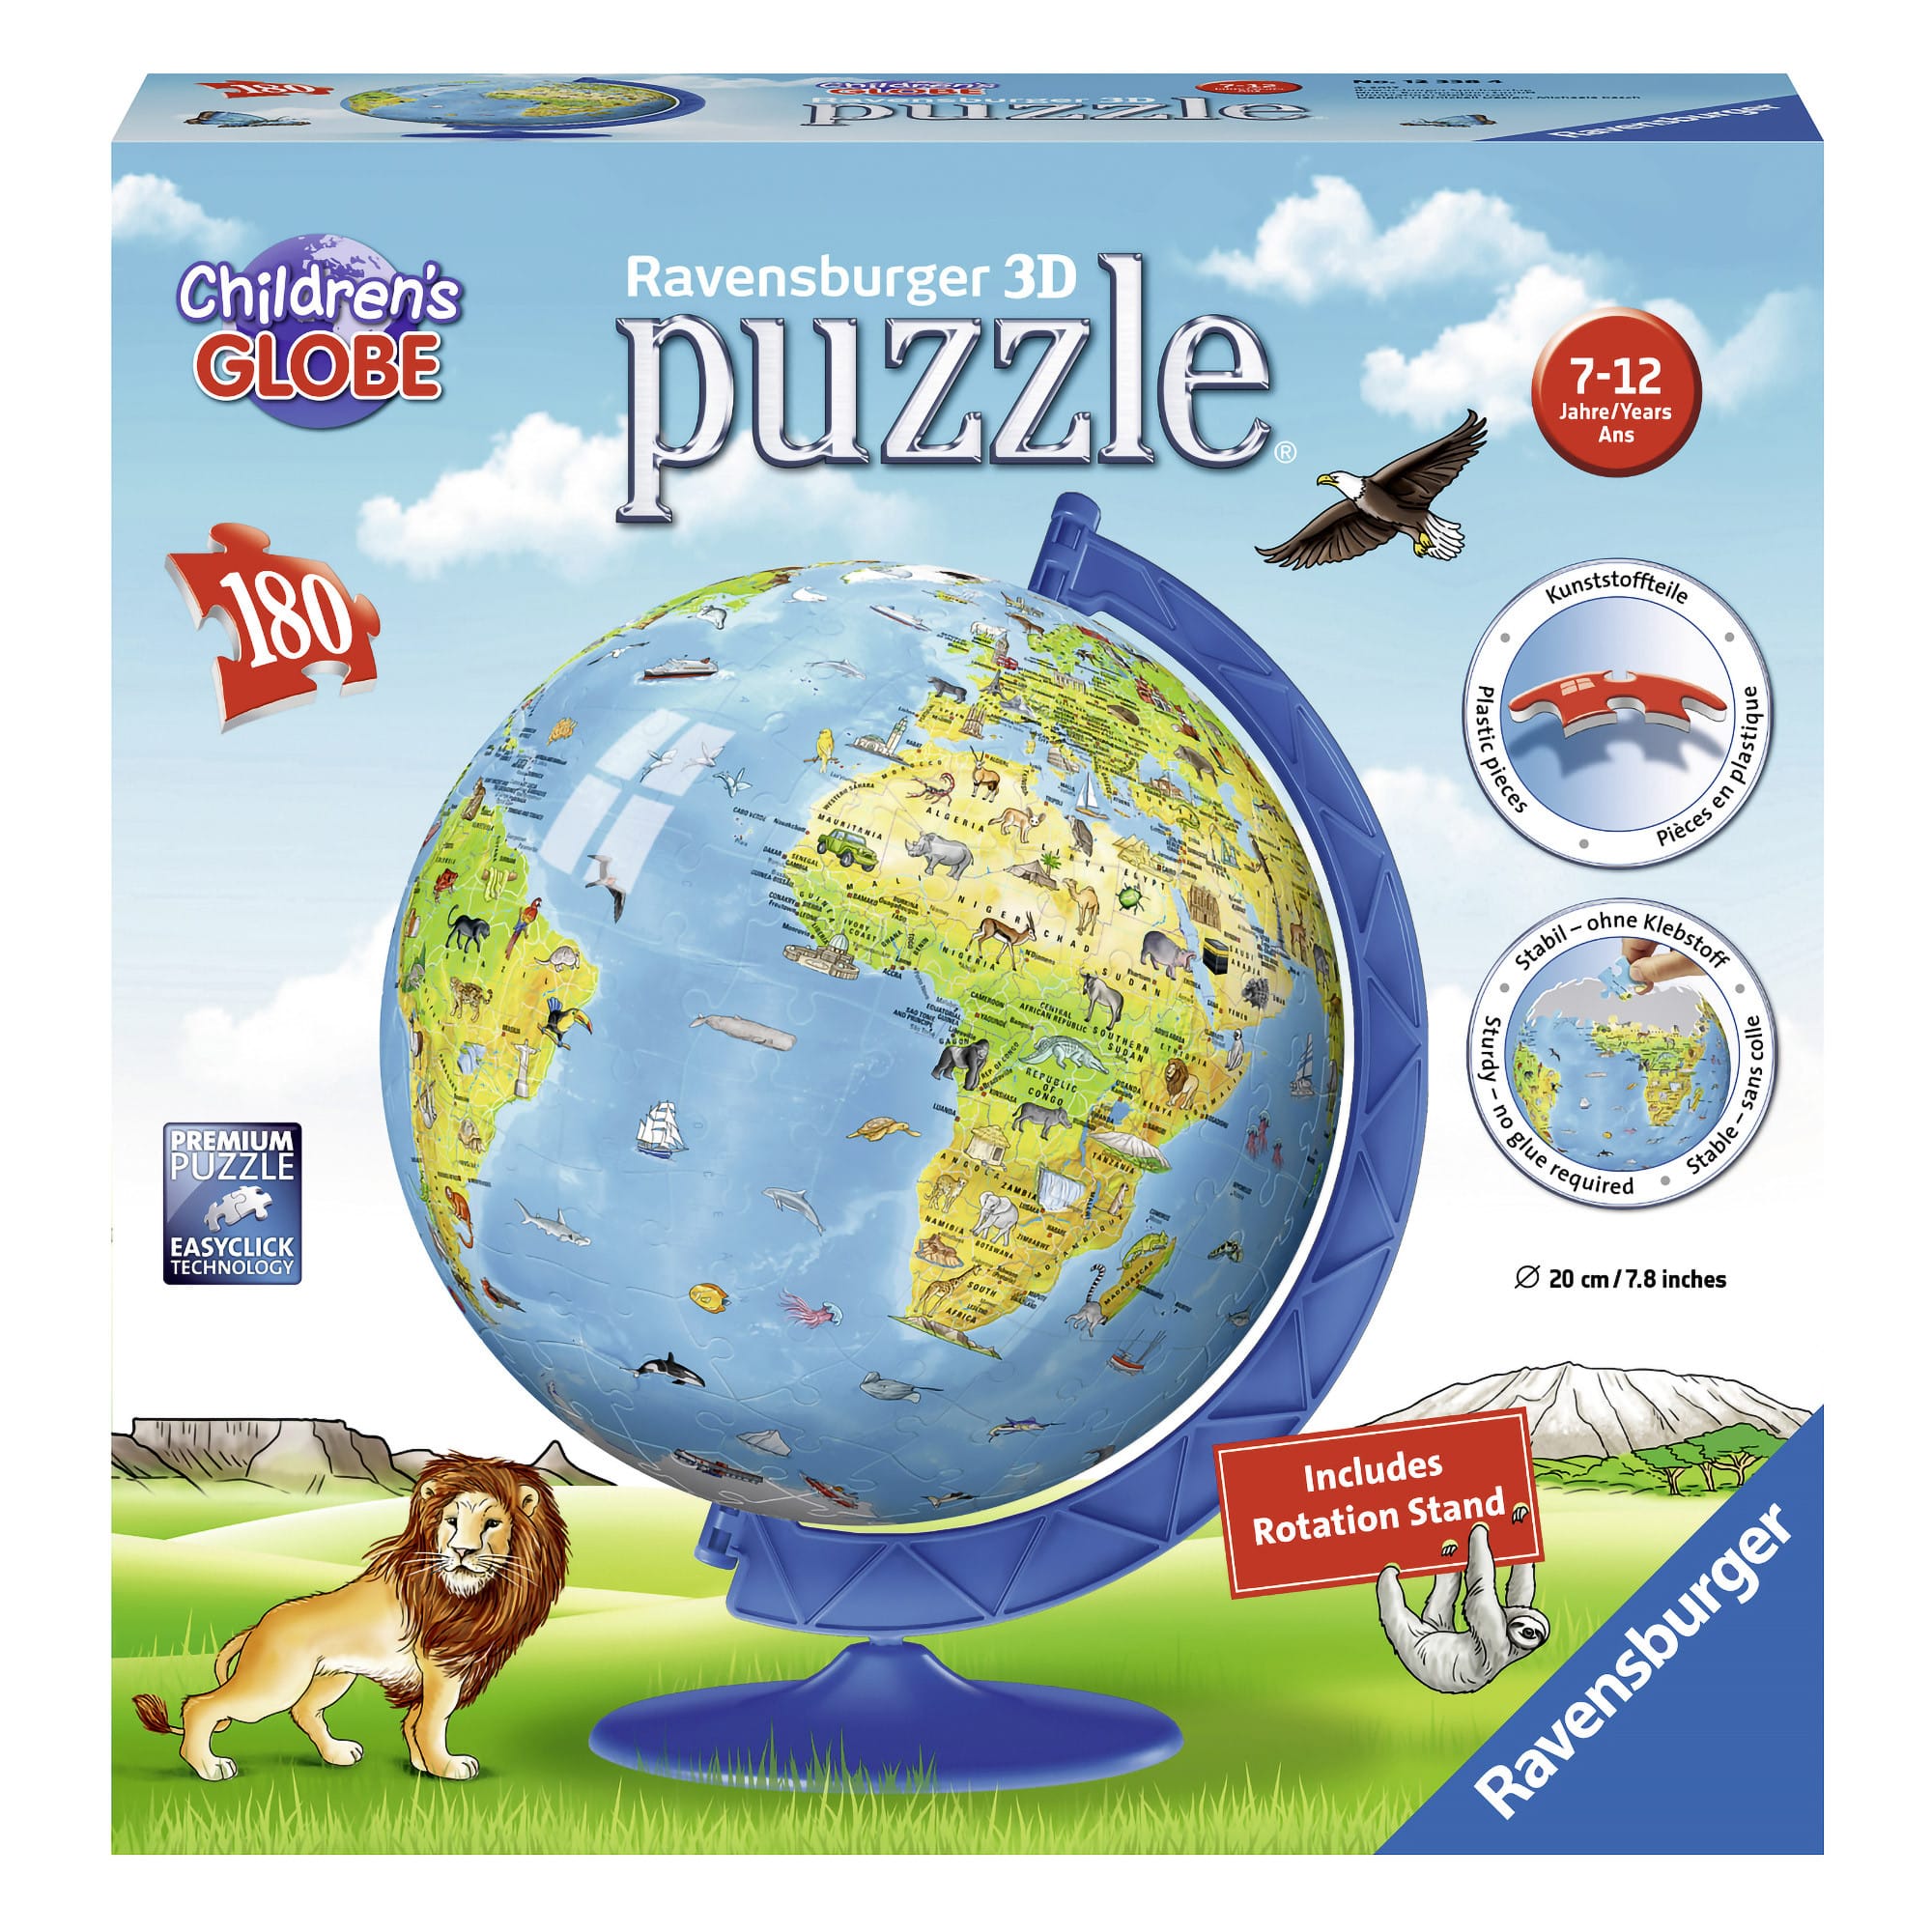 Ravensburger - 3D Puzzleball - 180 Piece Children's Globe